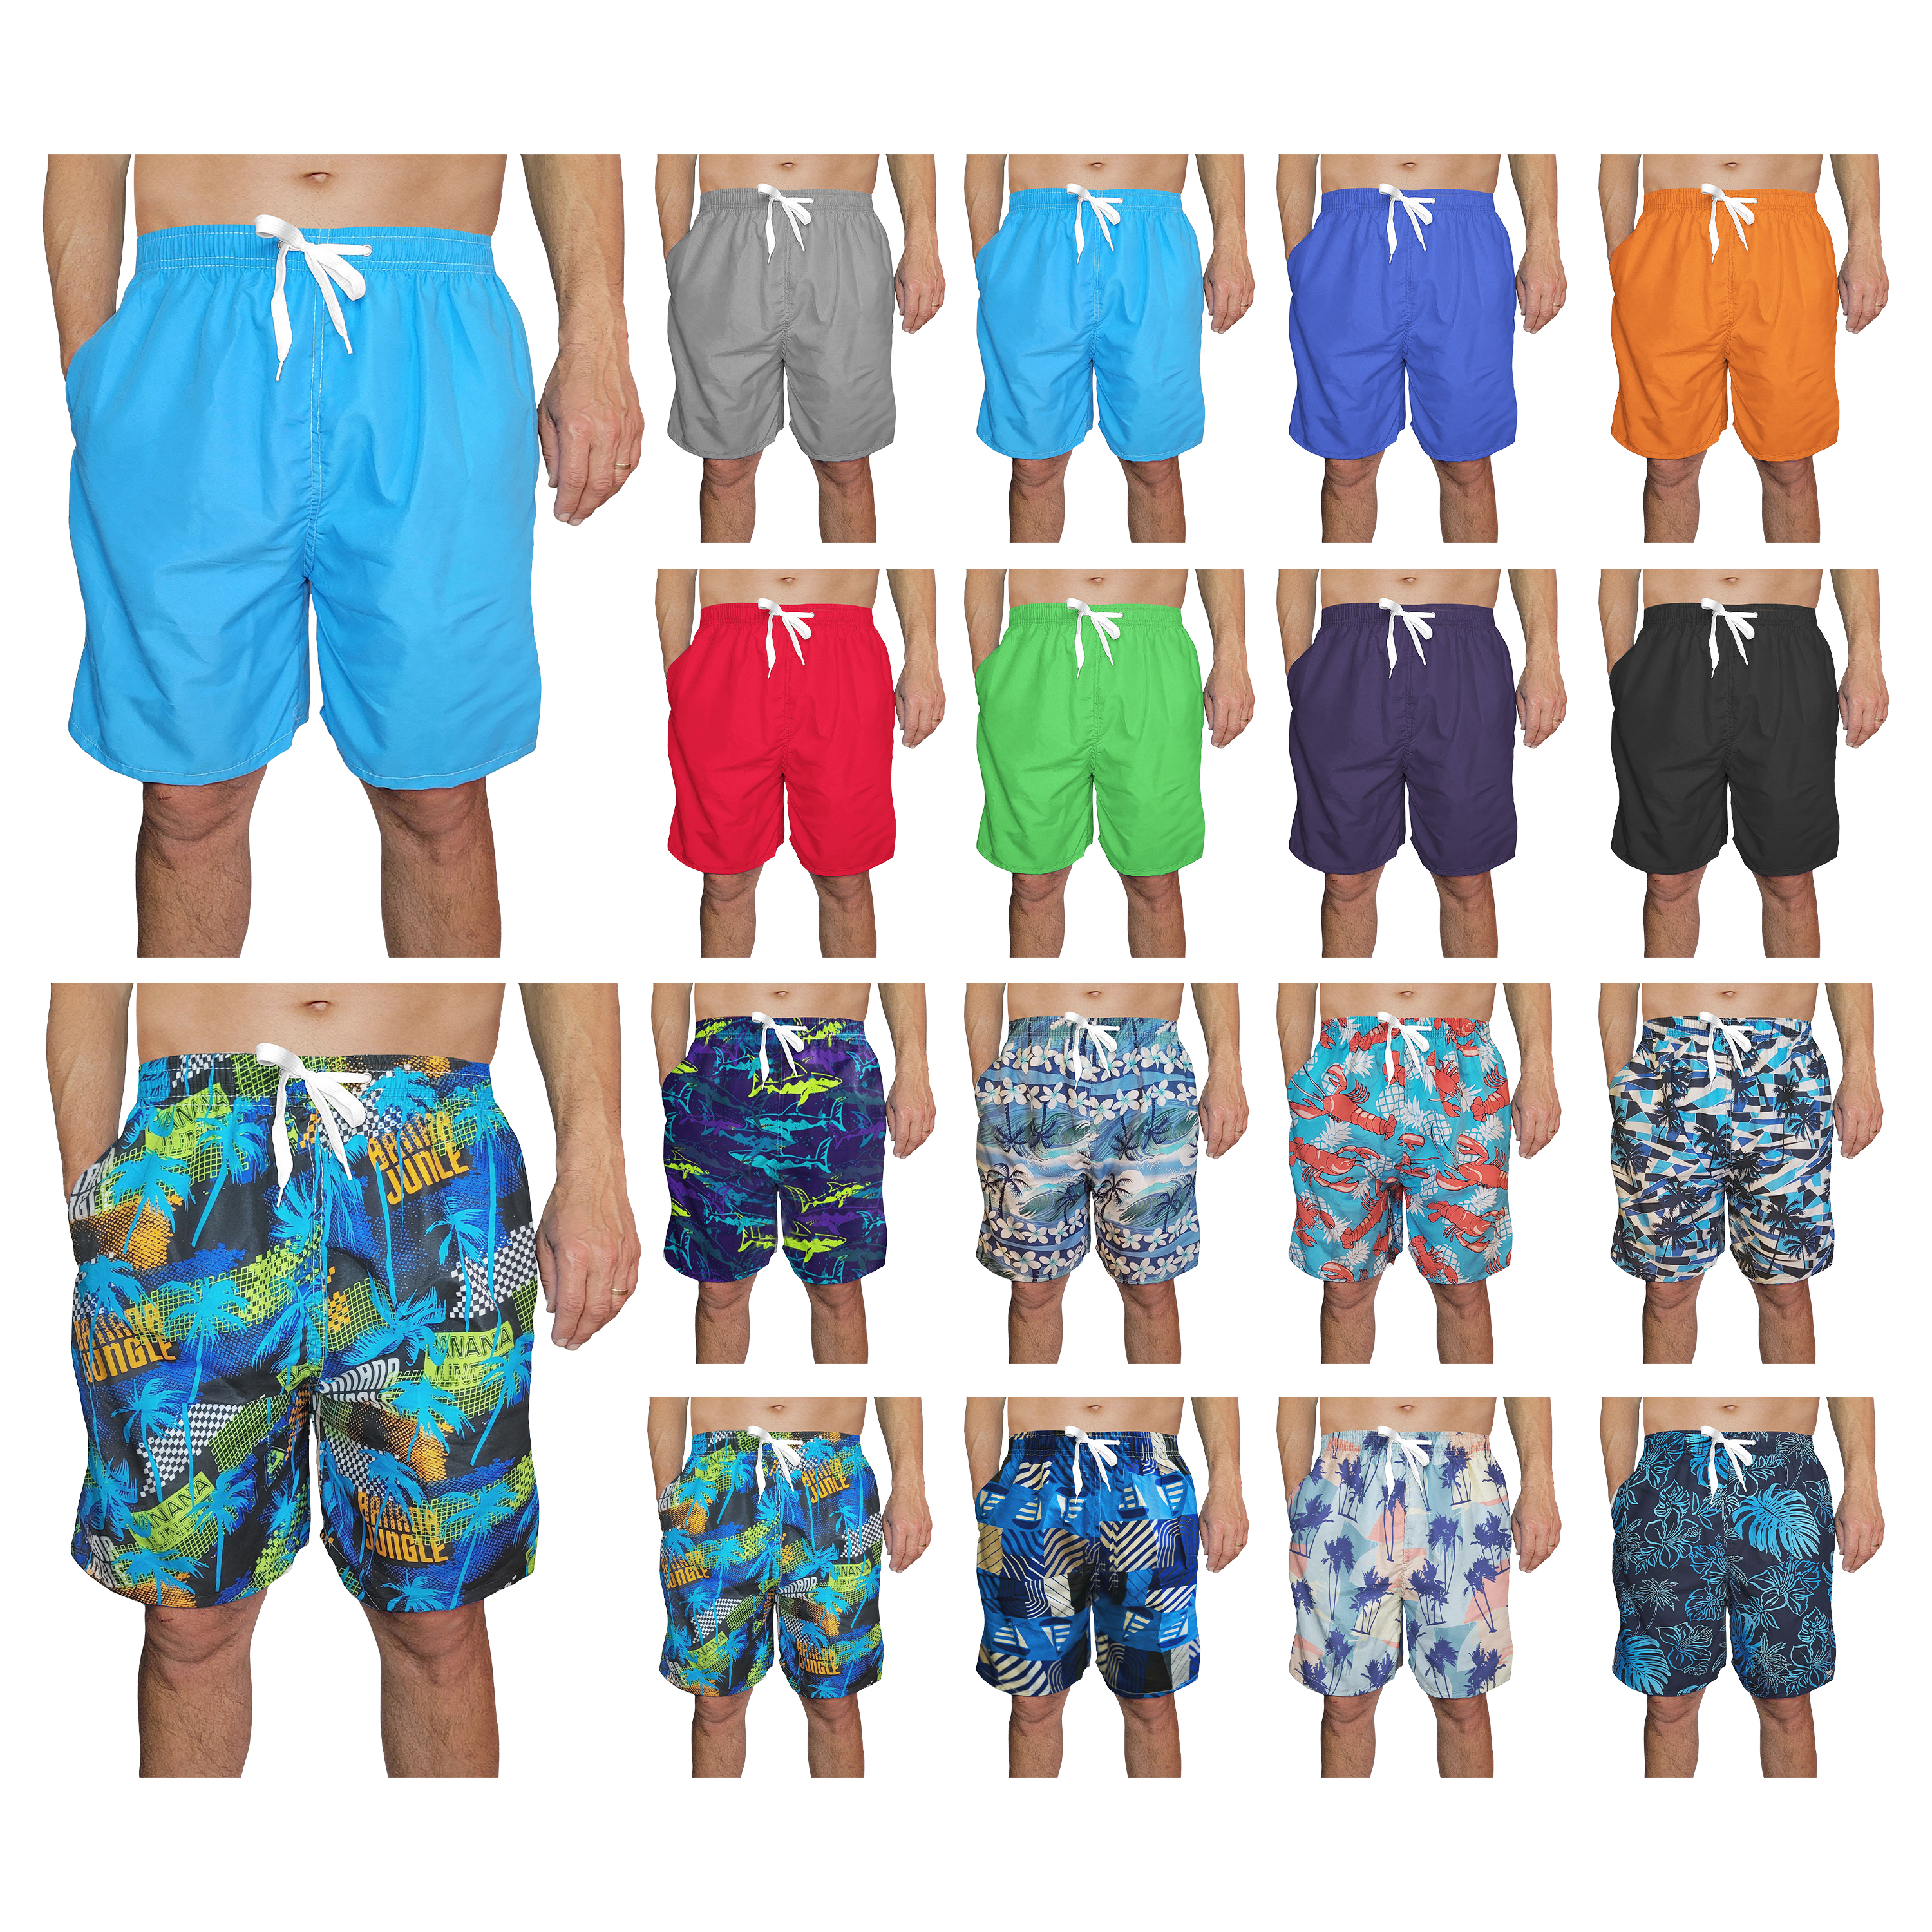 3-Pack: Men's Quick-Dry Solid & Printed Summer Beach Surf Board Swim Trunks Shorts - Medium, Solid